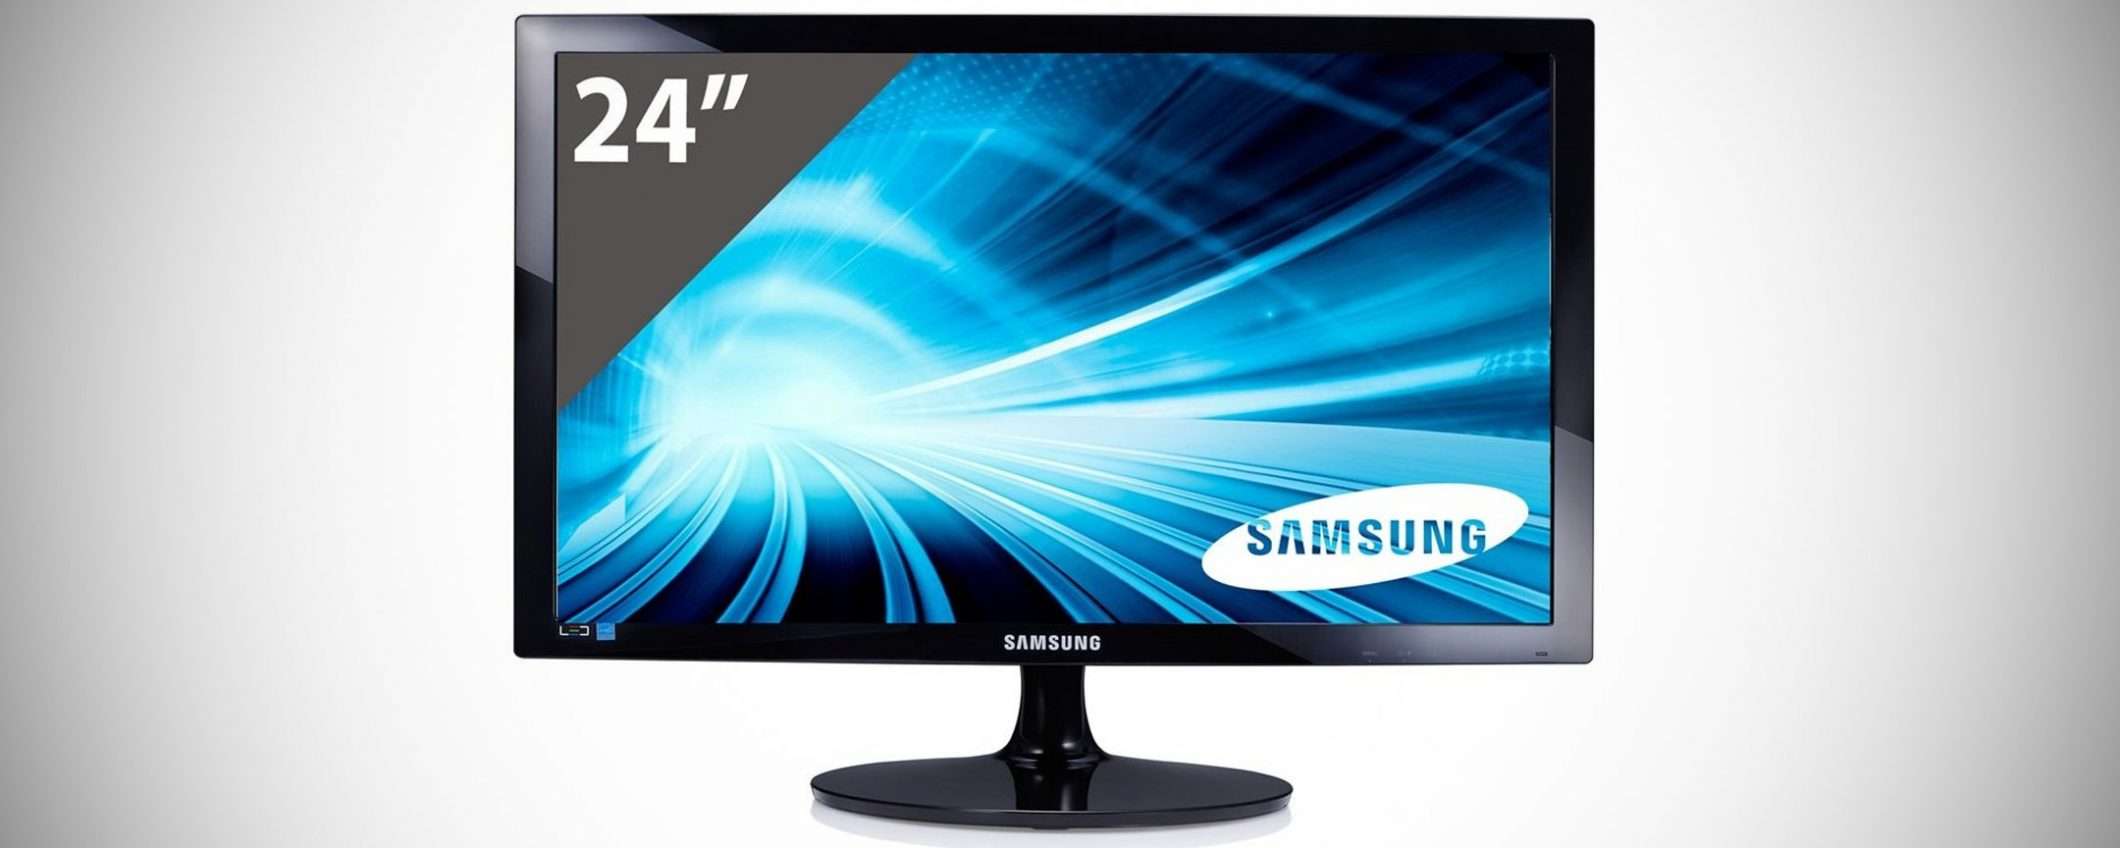 Offerte eBay: monitor Samsung S24D330H a € 89,99